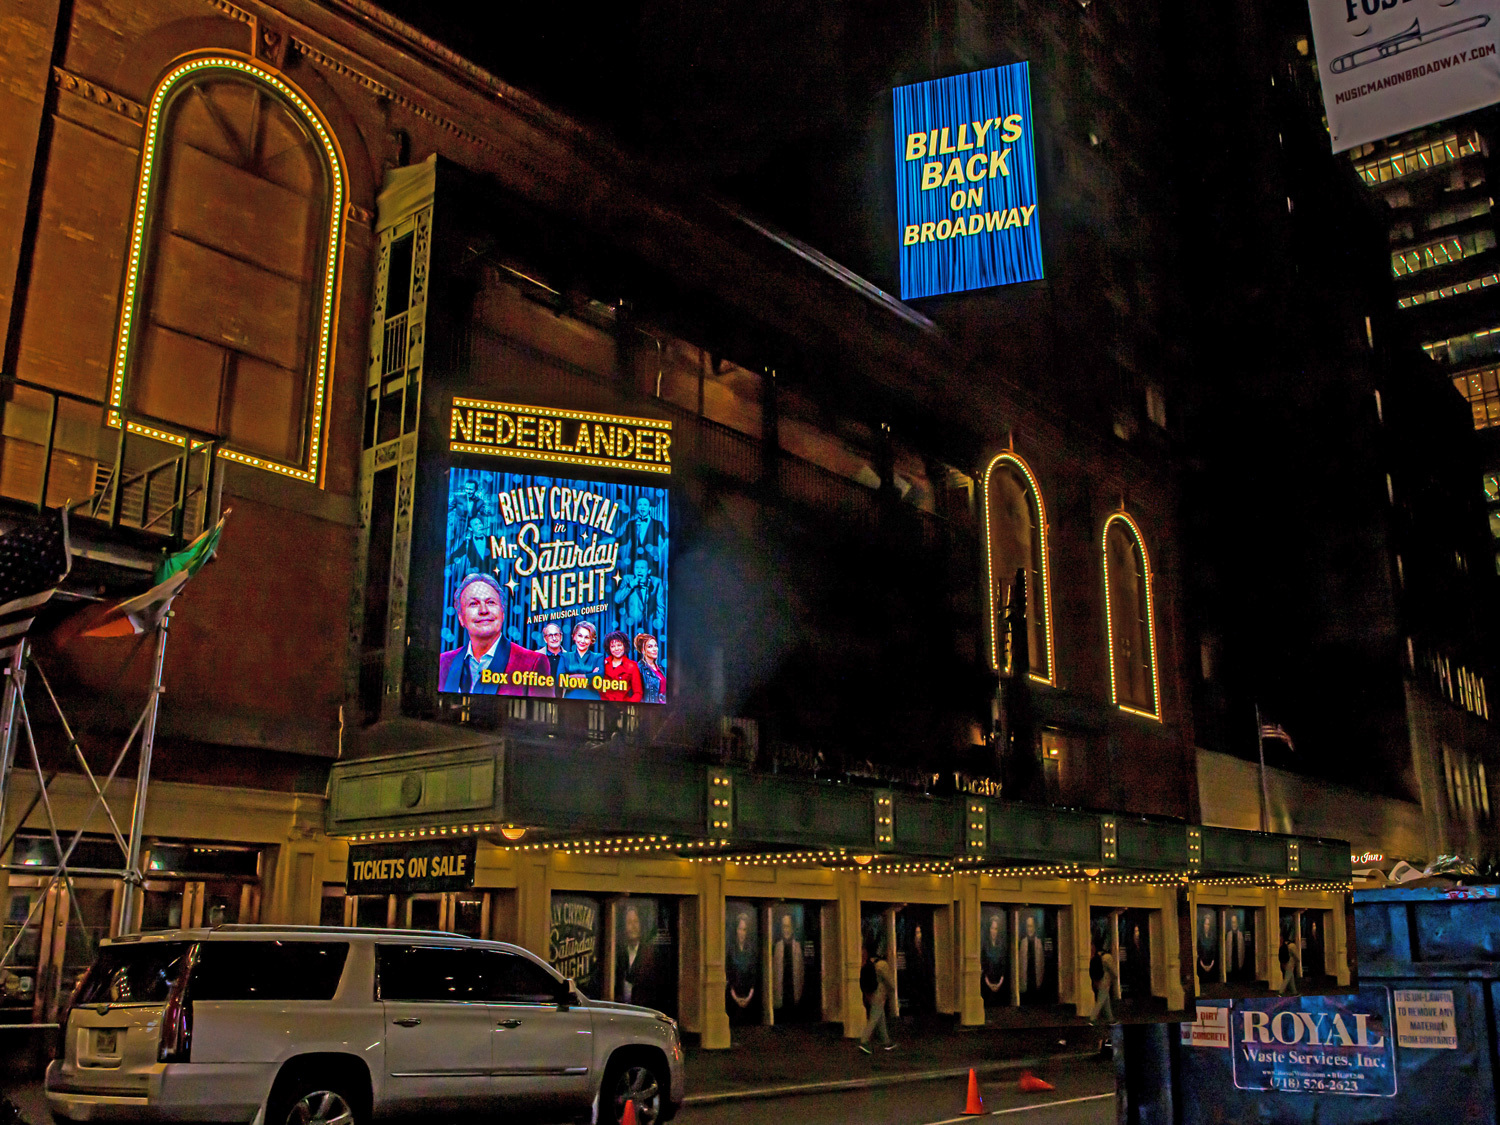 Mr Saturday Night Marquee at the Nederlander Theatre on Broadway